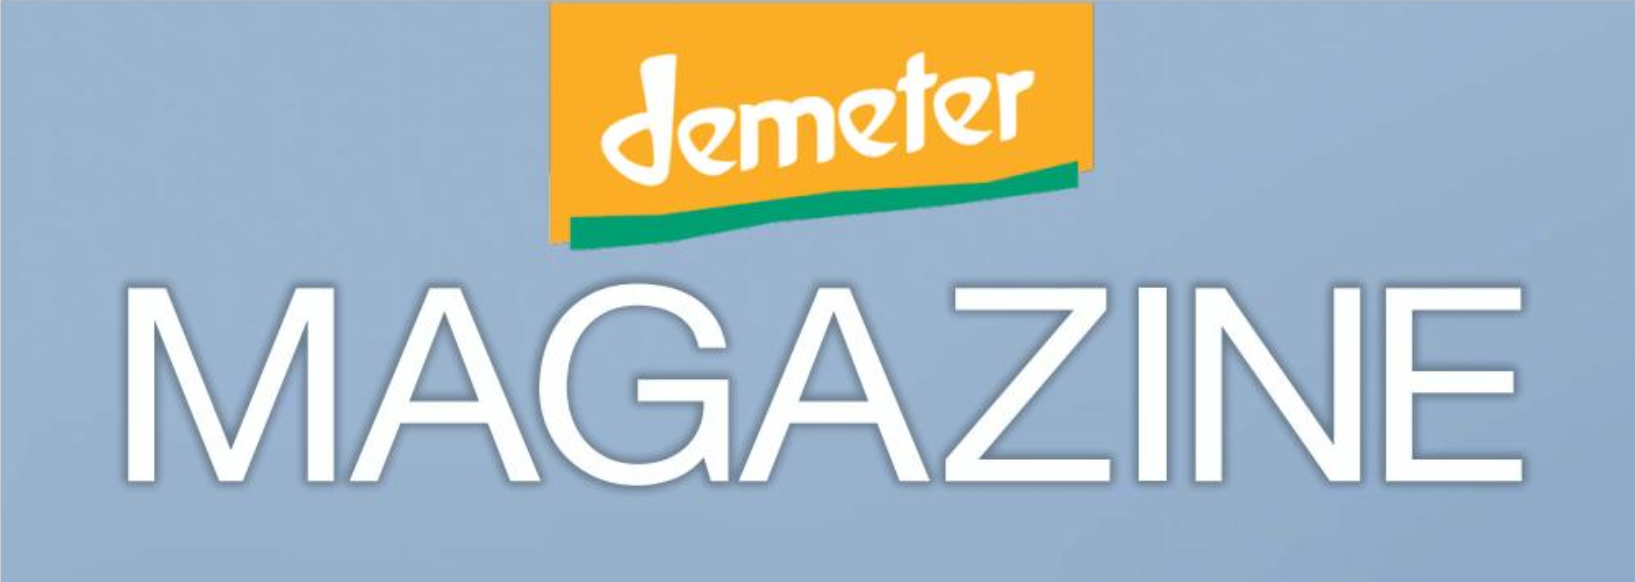 Demeter MAgazine Logo.jpg